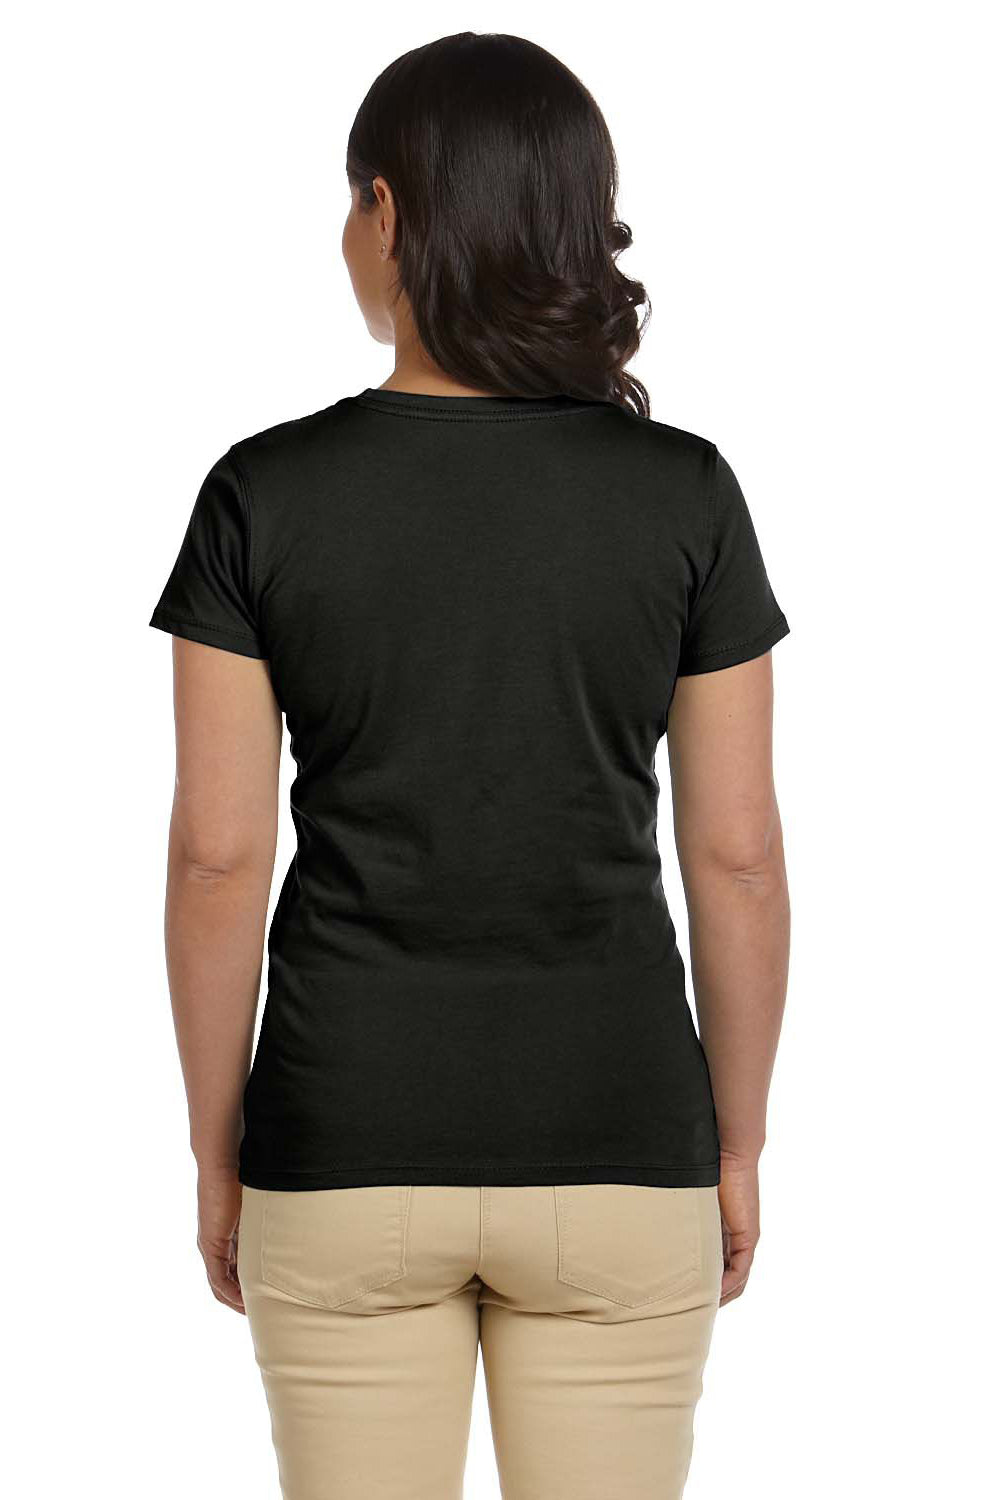 Econscious EC3000 Womens Heather Sueded Short Sleeve Crewneck T-Shirt Black Back